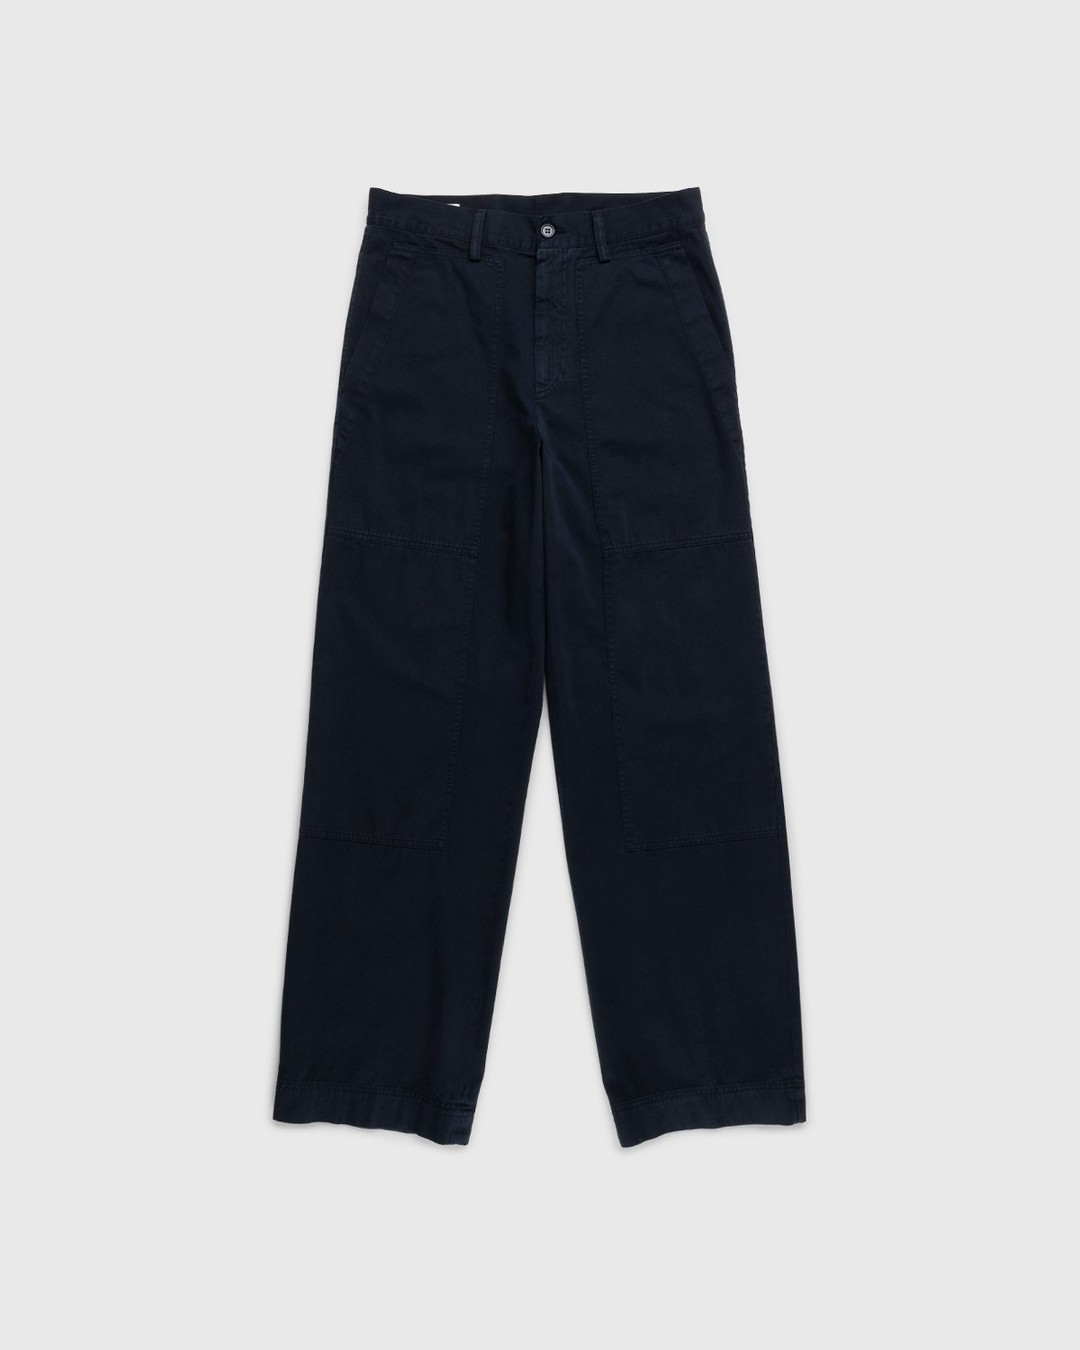 Dries van Noten – Pilson Pants Navy - Trousers - Blue - Image 1